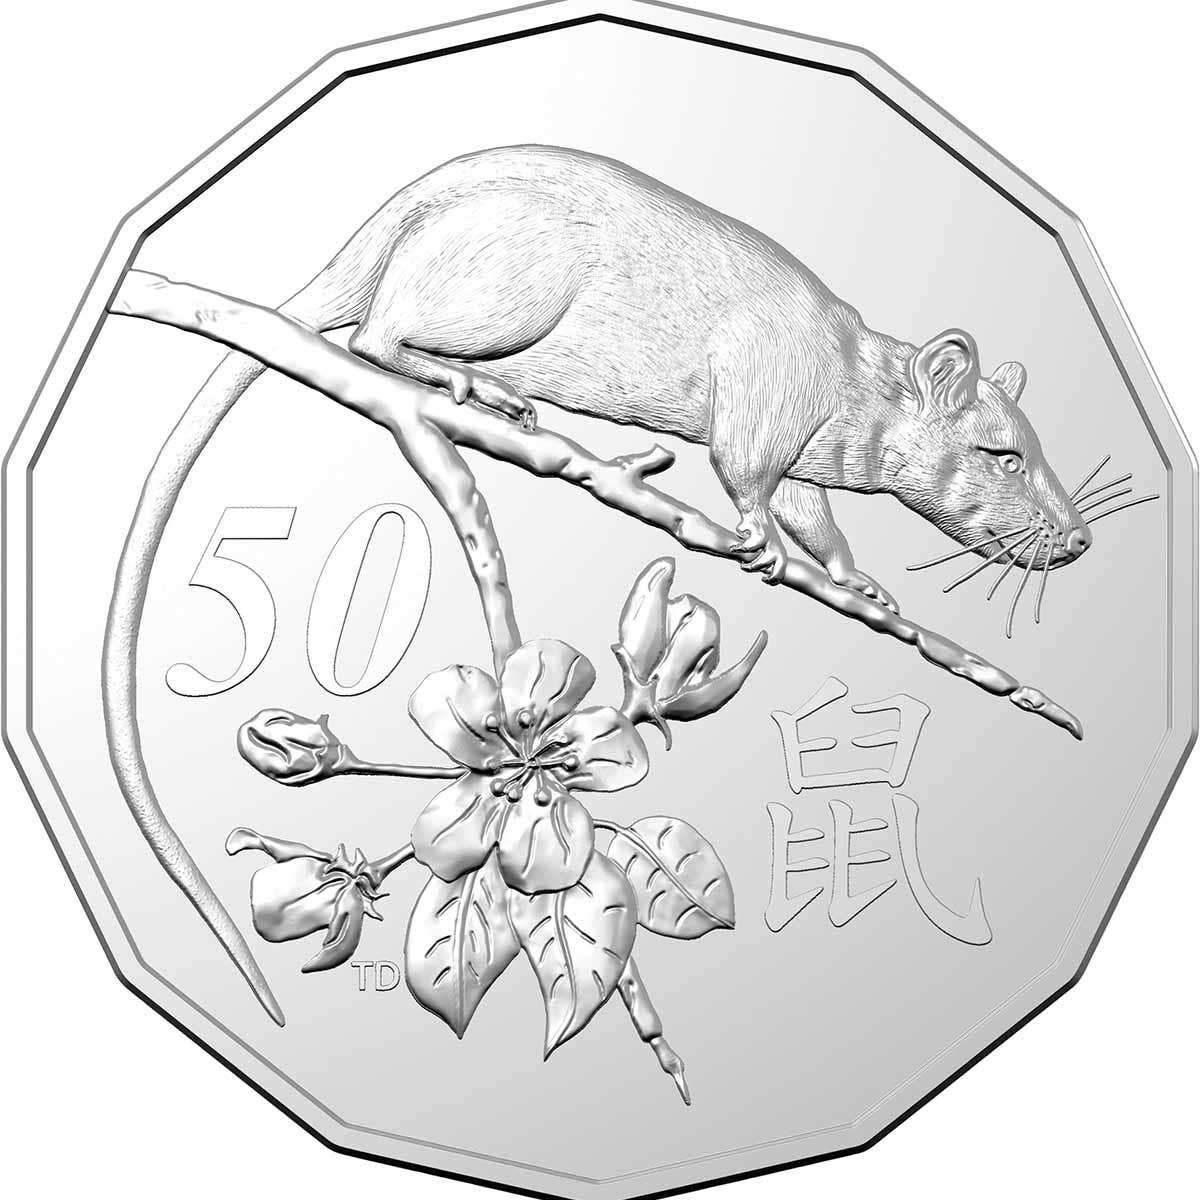 Year of the Rat 2020 50c Tetradecagon Cu-Ni Uncirculated Coin